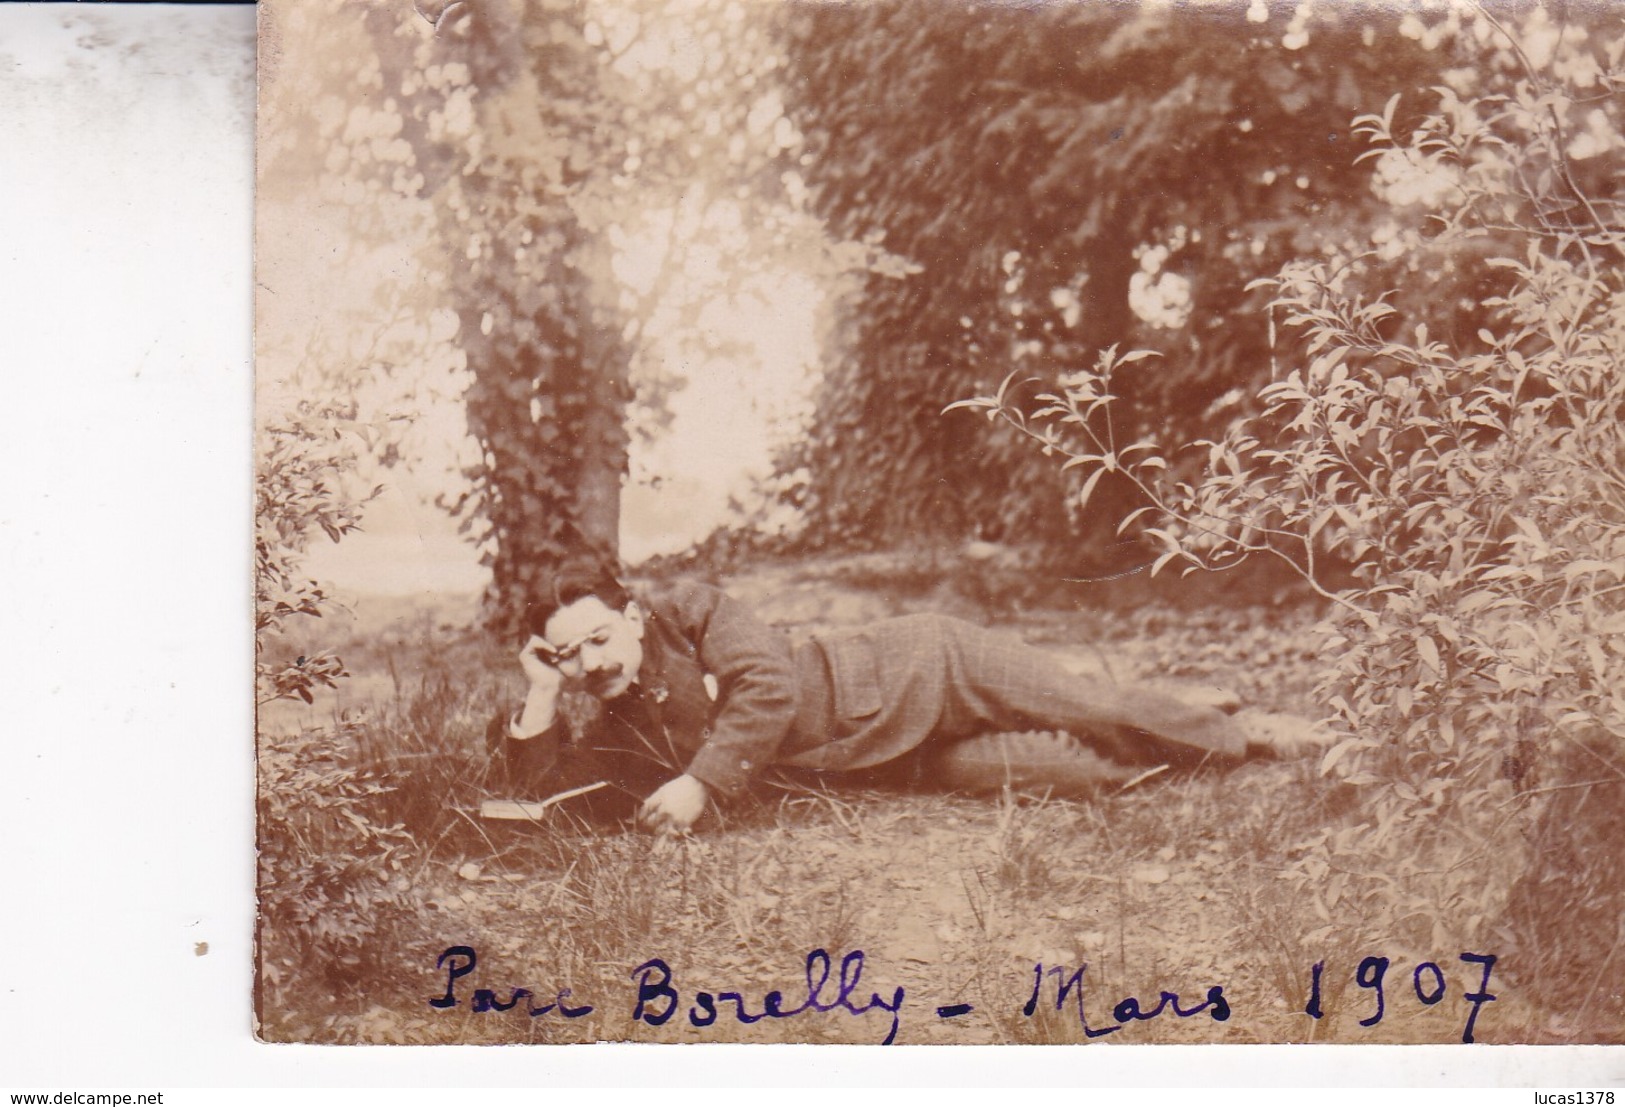 JOLI PHOTO MARSEILLE / PARC BORELY / MARS 1907 - Parks